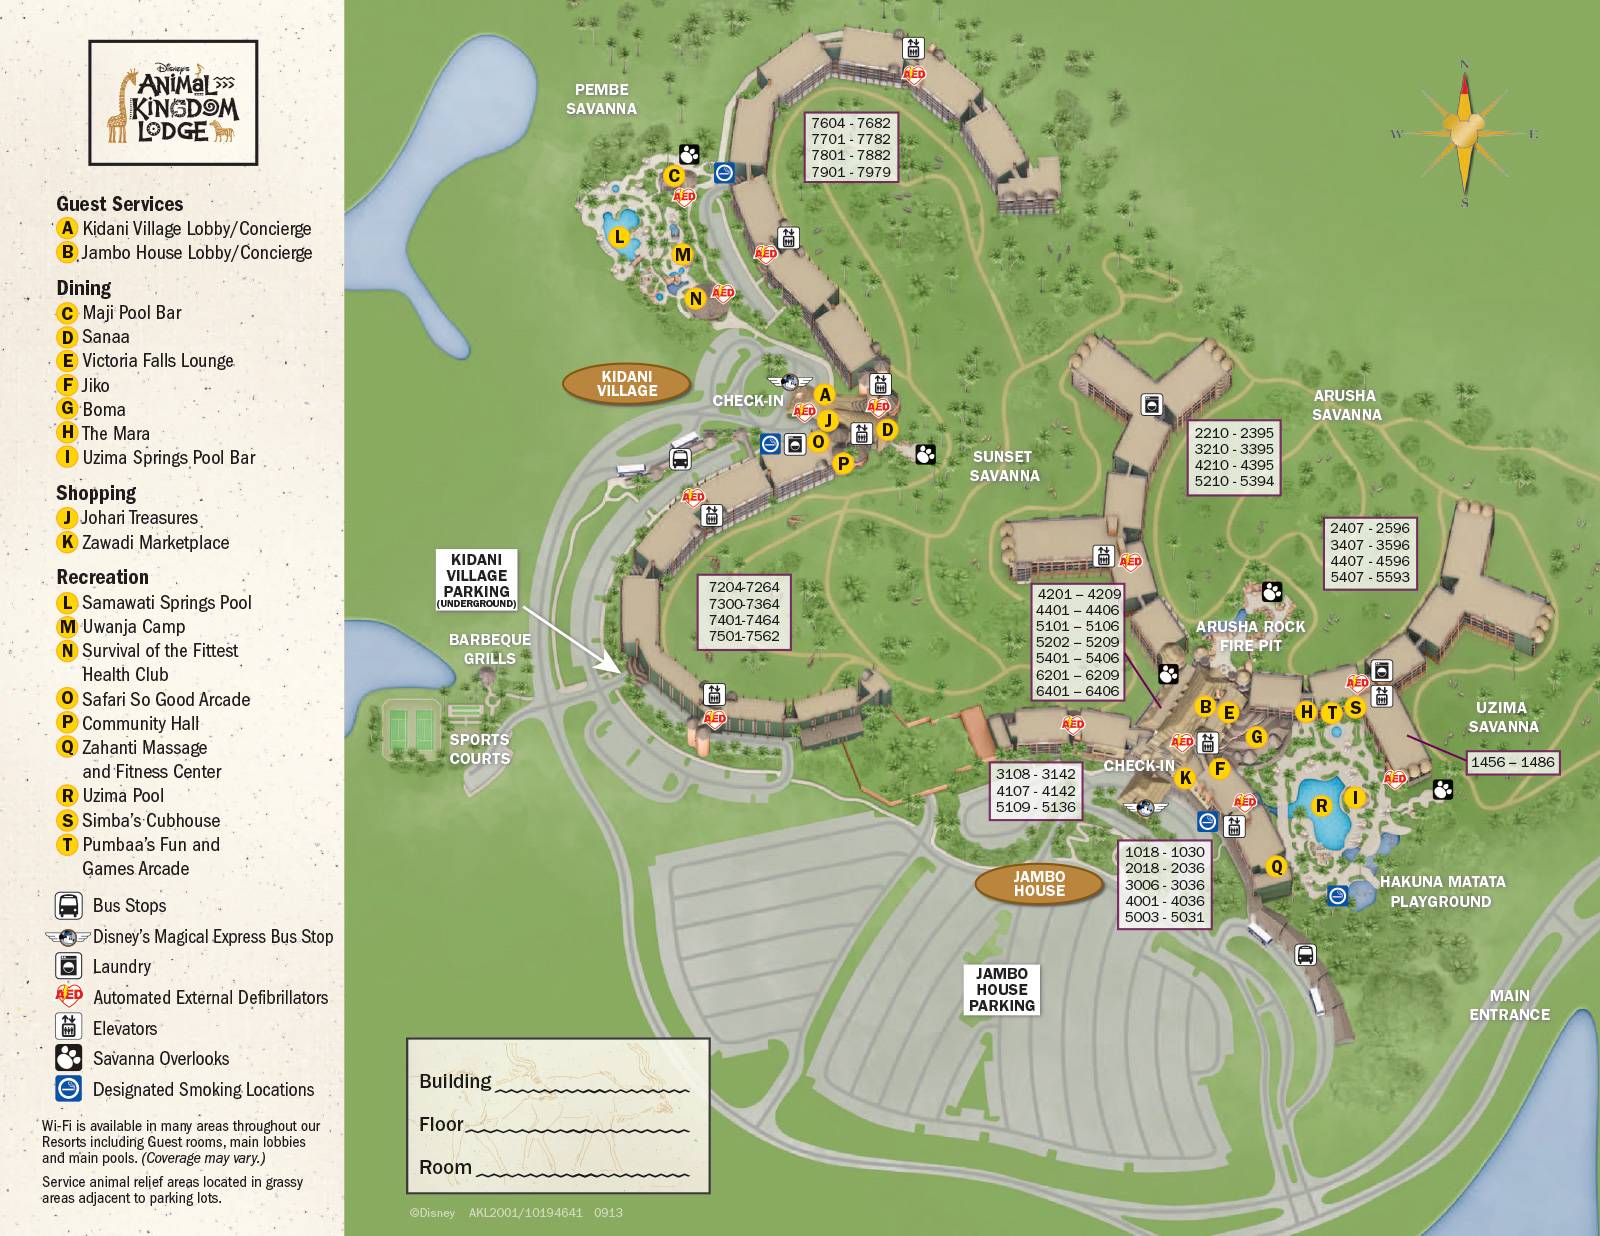 New 2013 Animal Kingdom Lodge map